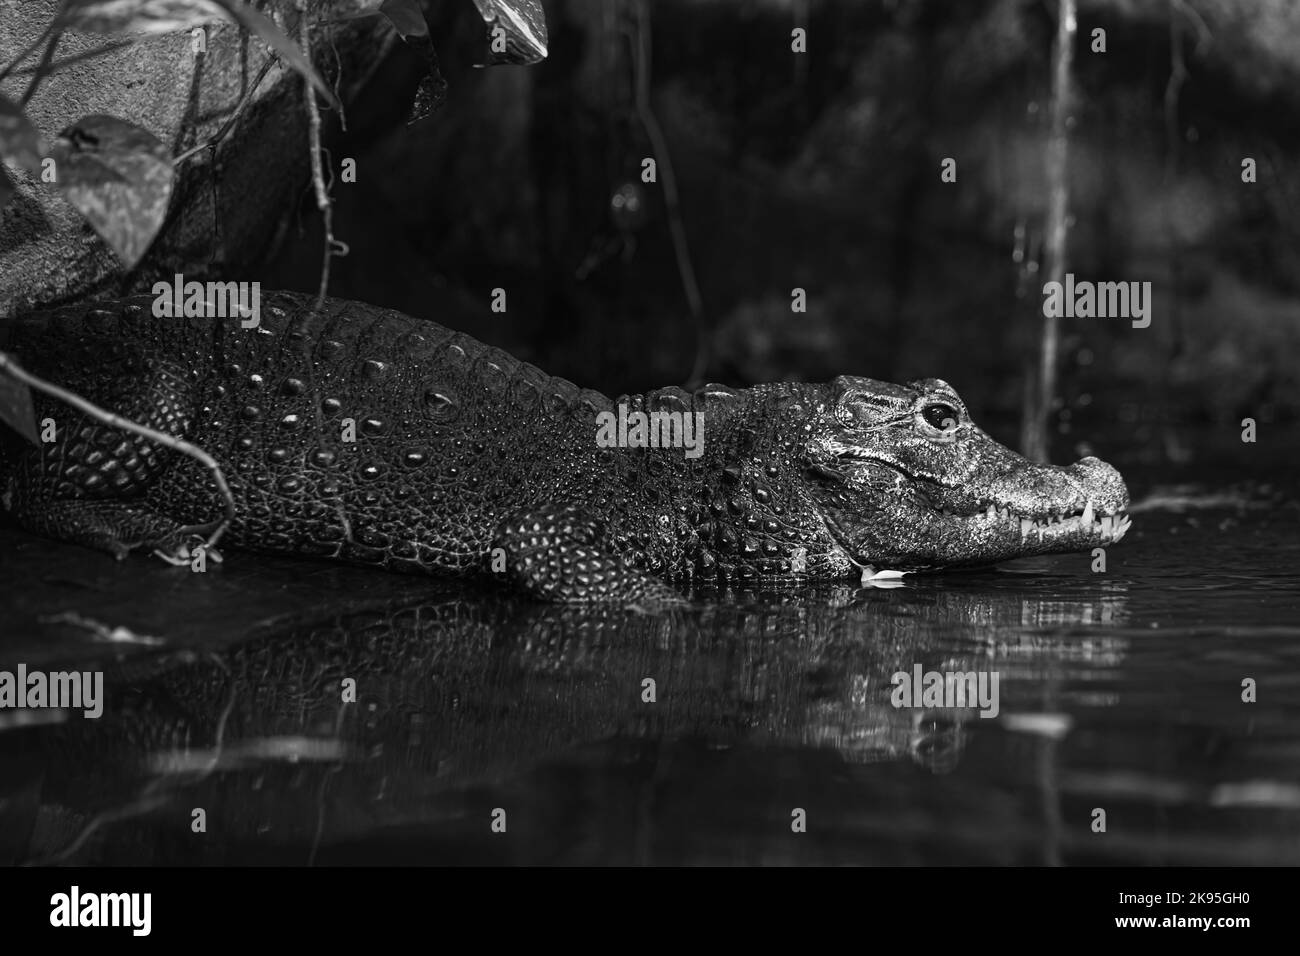 Osteolaemus tetraspis, black and white Dwarf crocodile Stock Photo